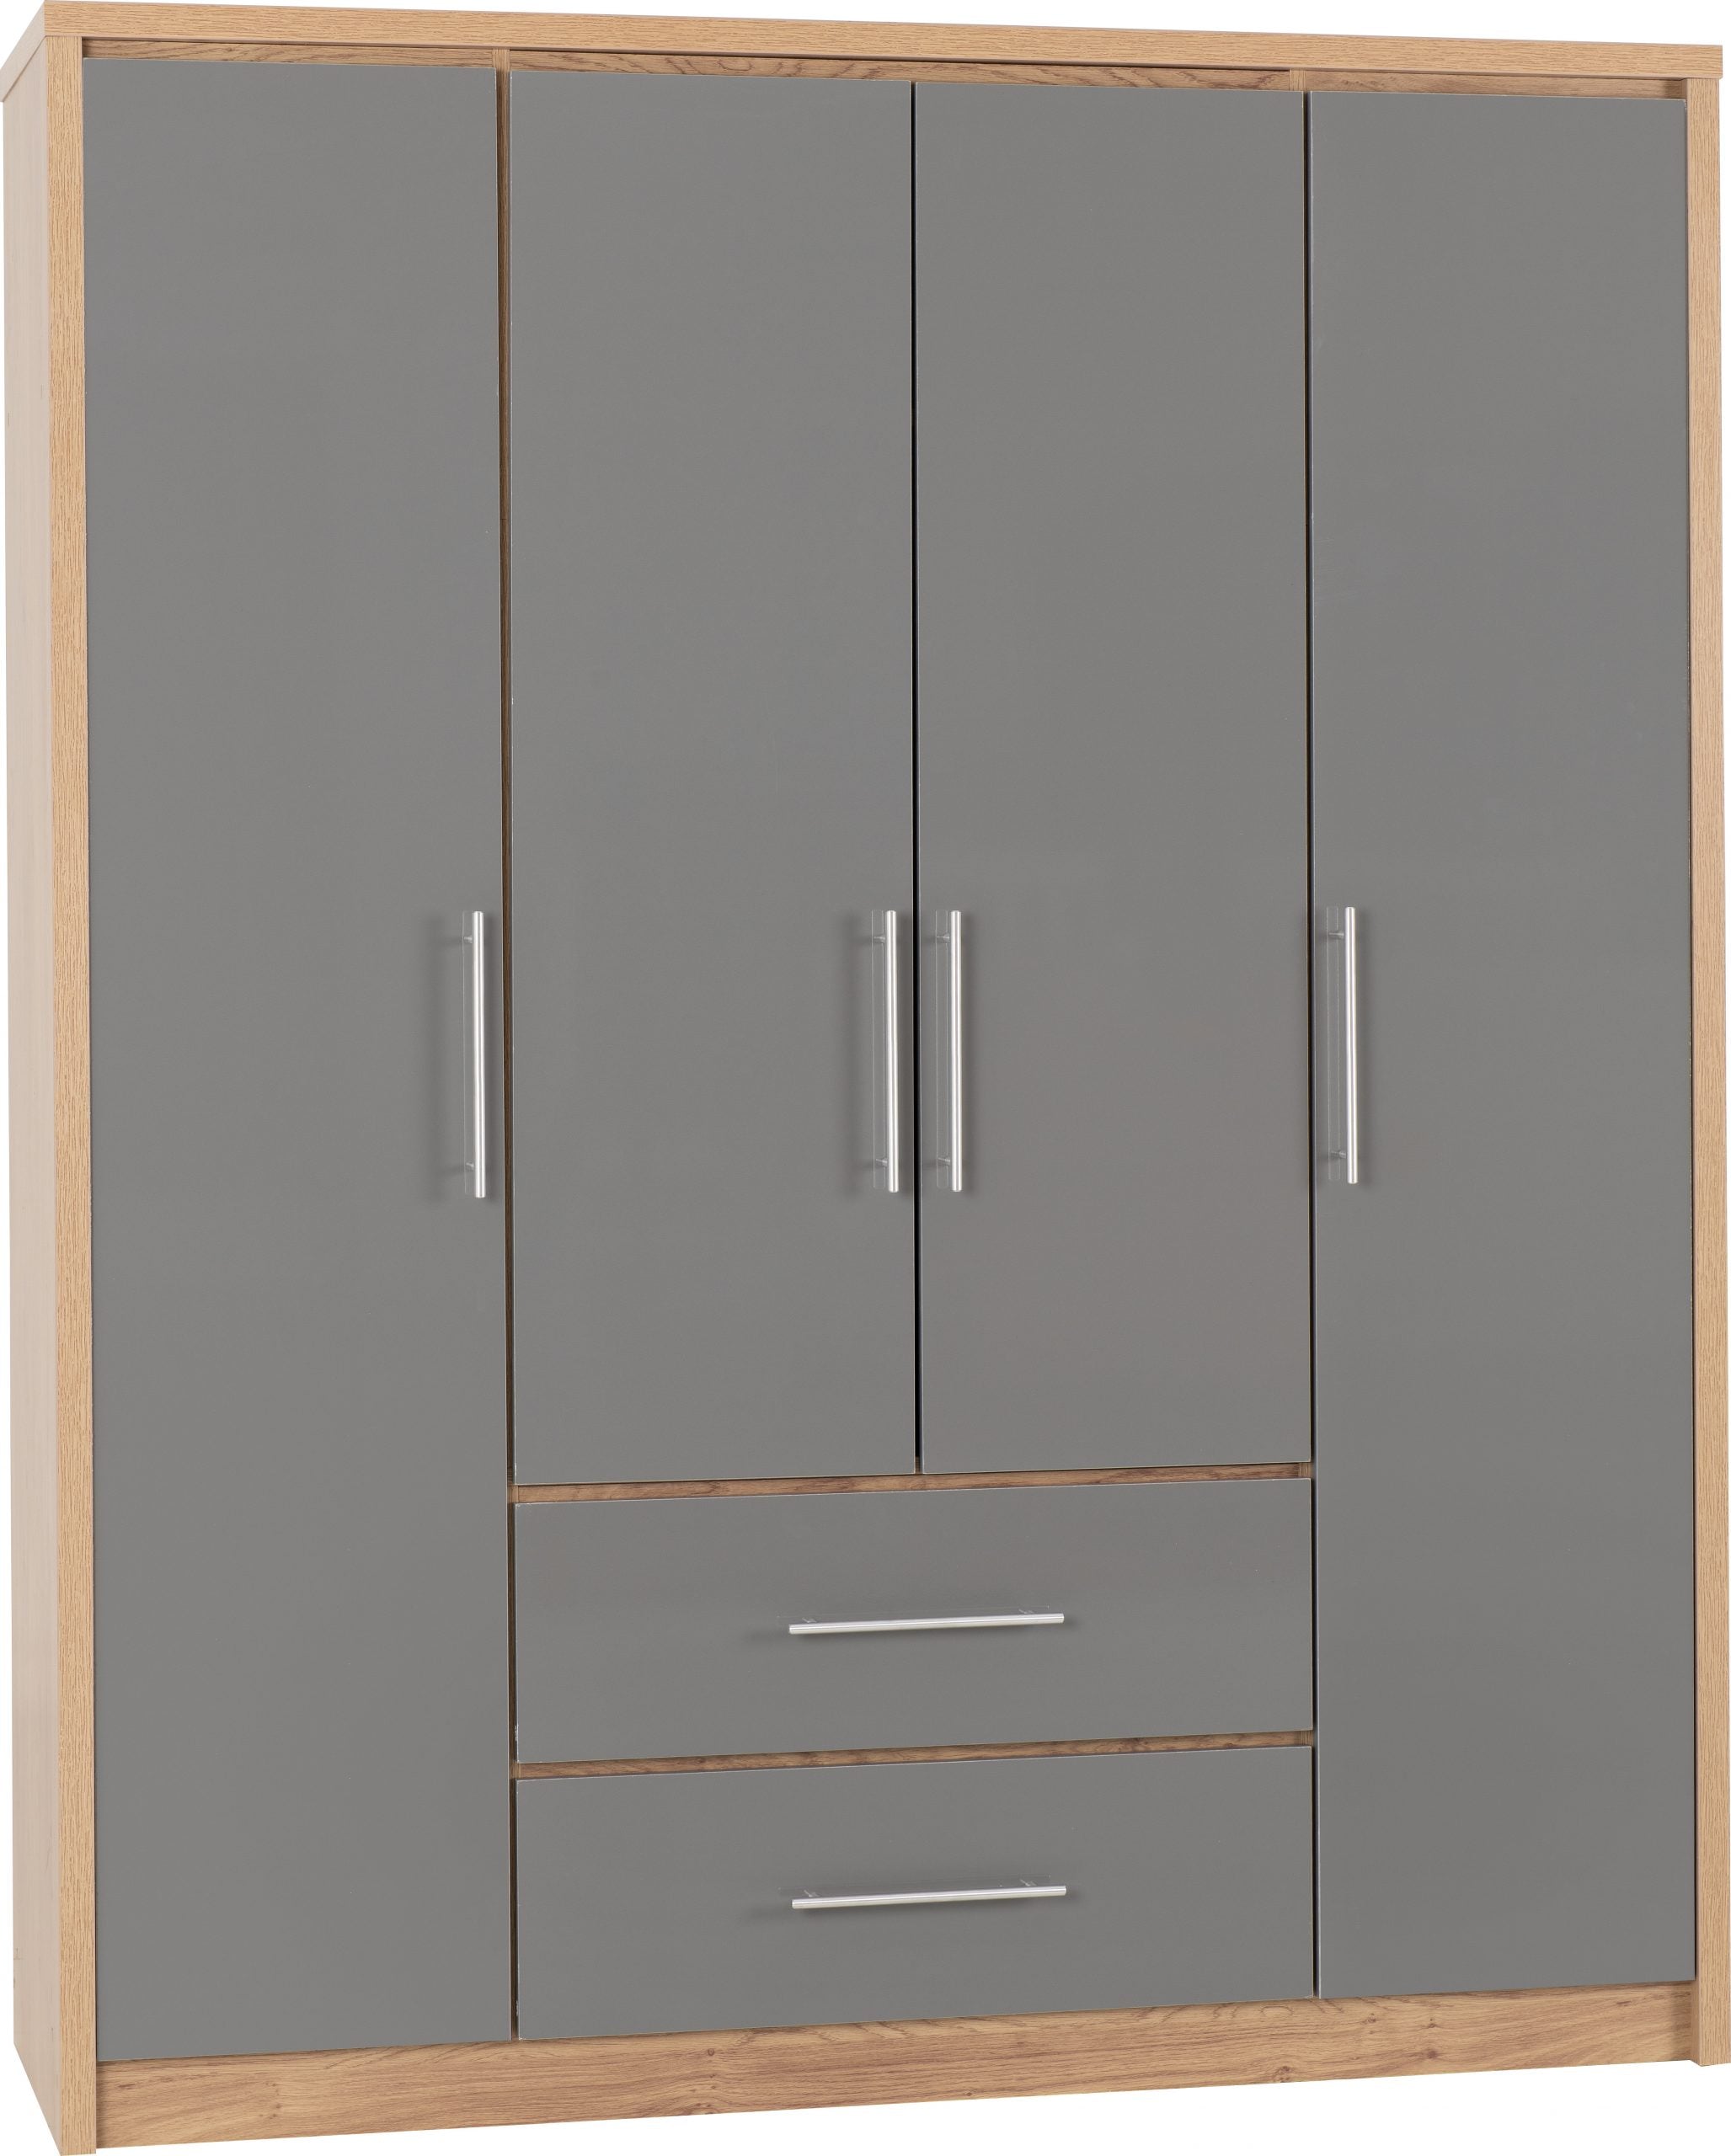 Seville 4 Door 2 Drawer Wardrobe Grey High Gloss/Light Oak Effect Venee